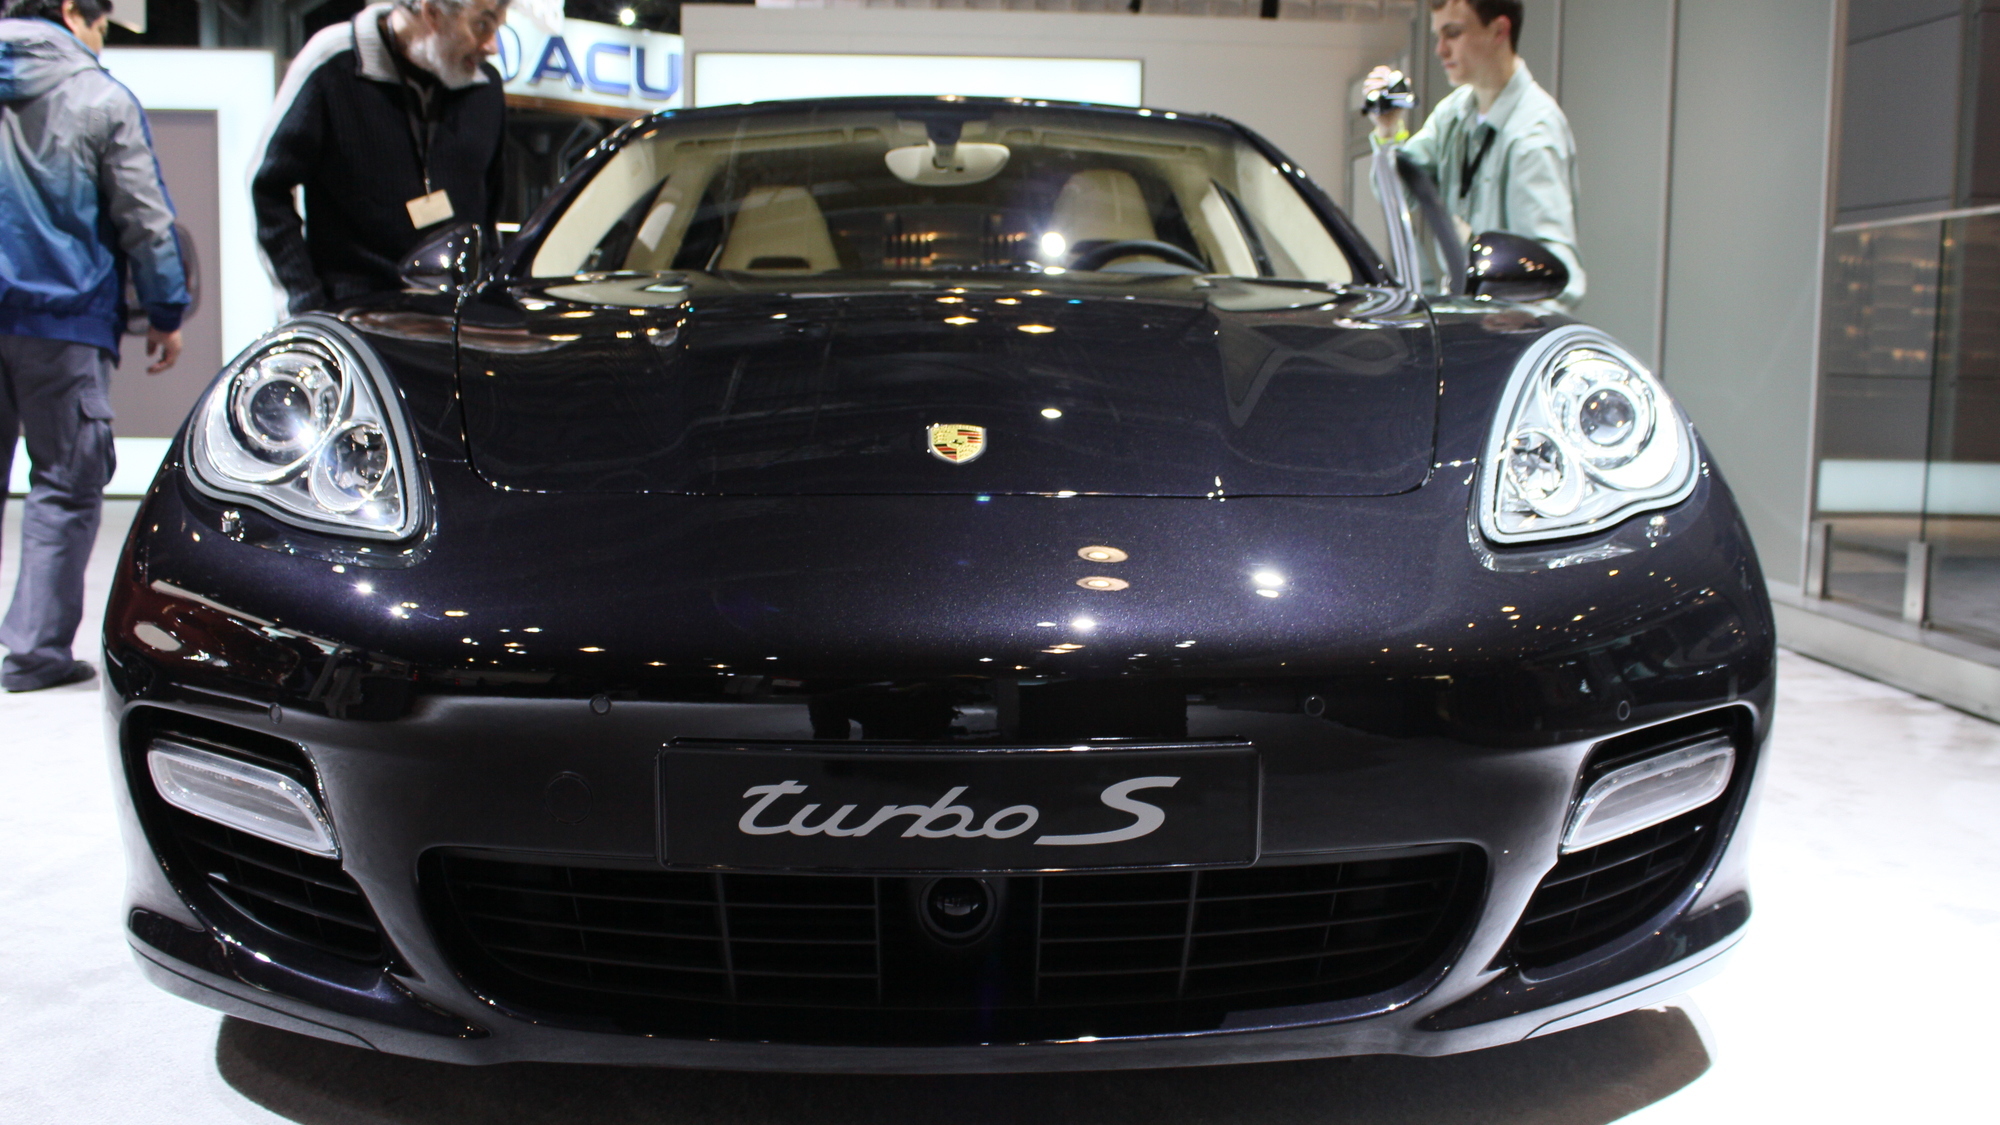 2012 Porsche Panamera Turbo S live photos